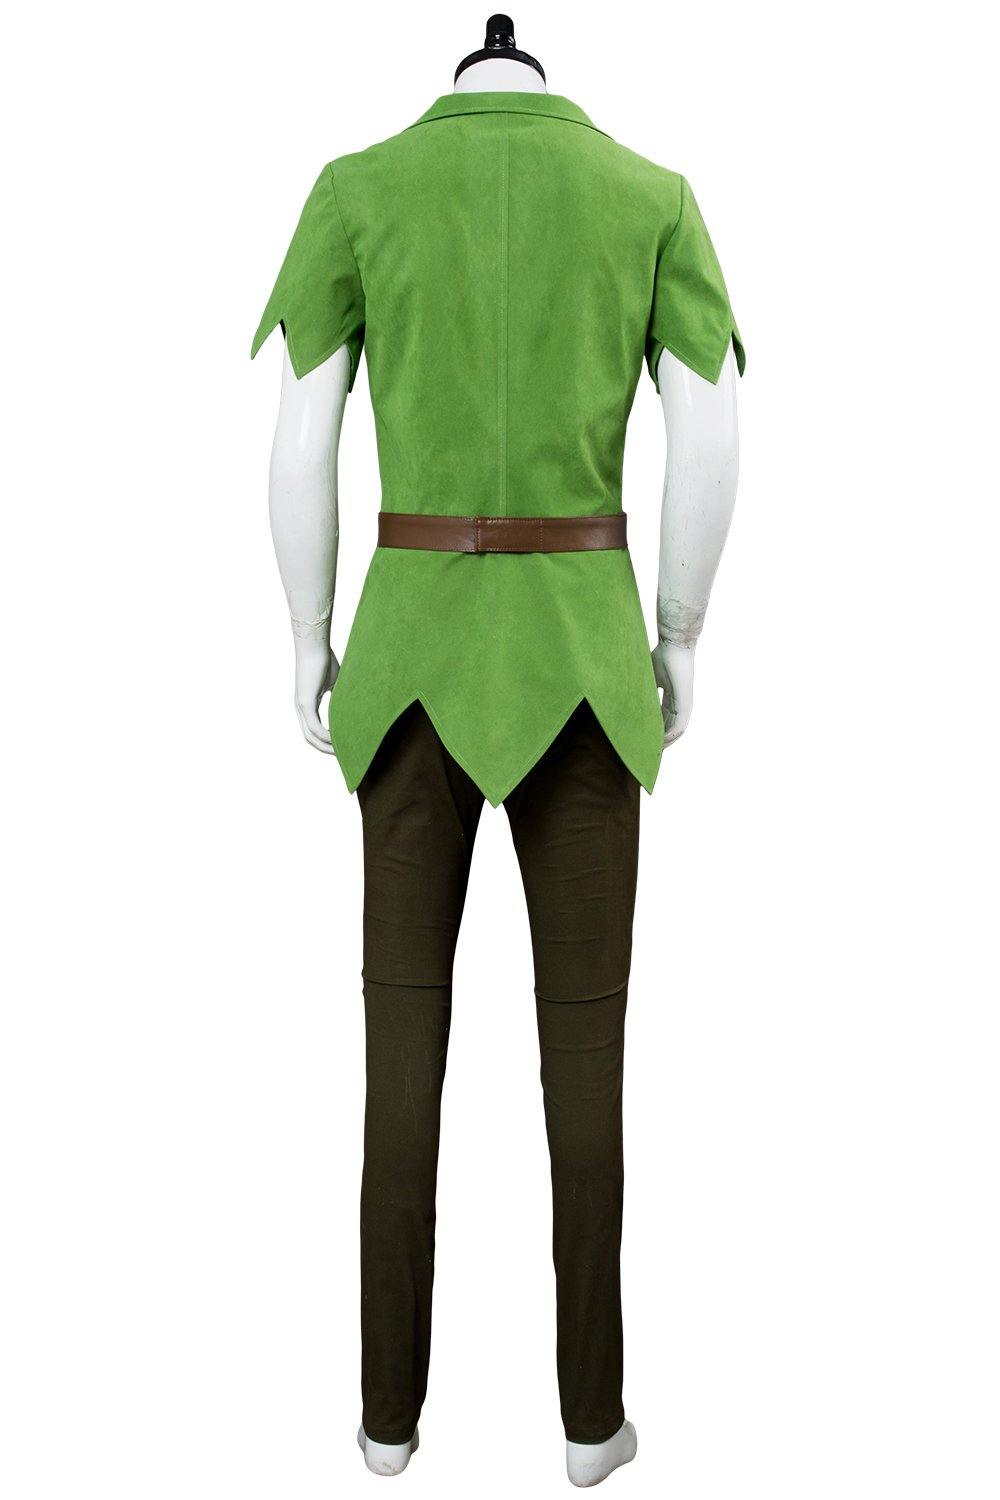 Nimmerland Peter Pan Neverland Cosplay Kostüm Set - cosplaycartde